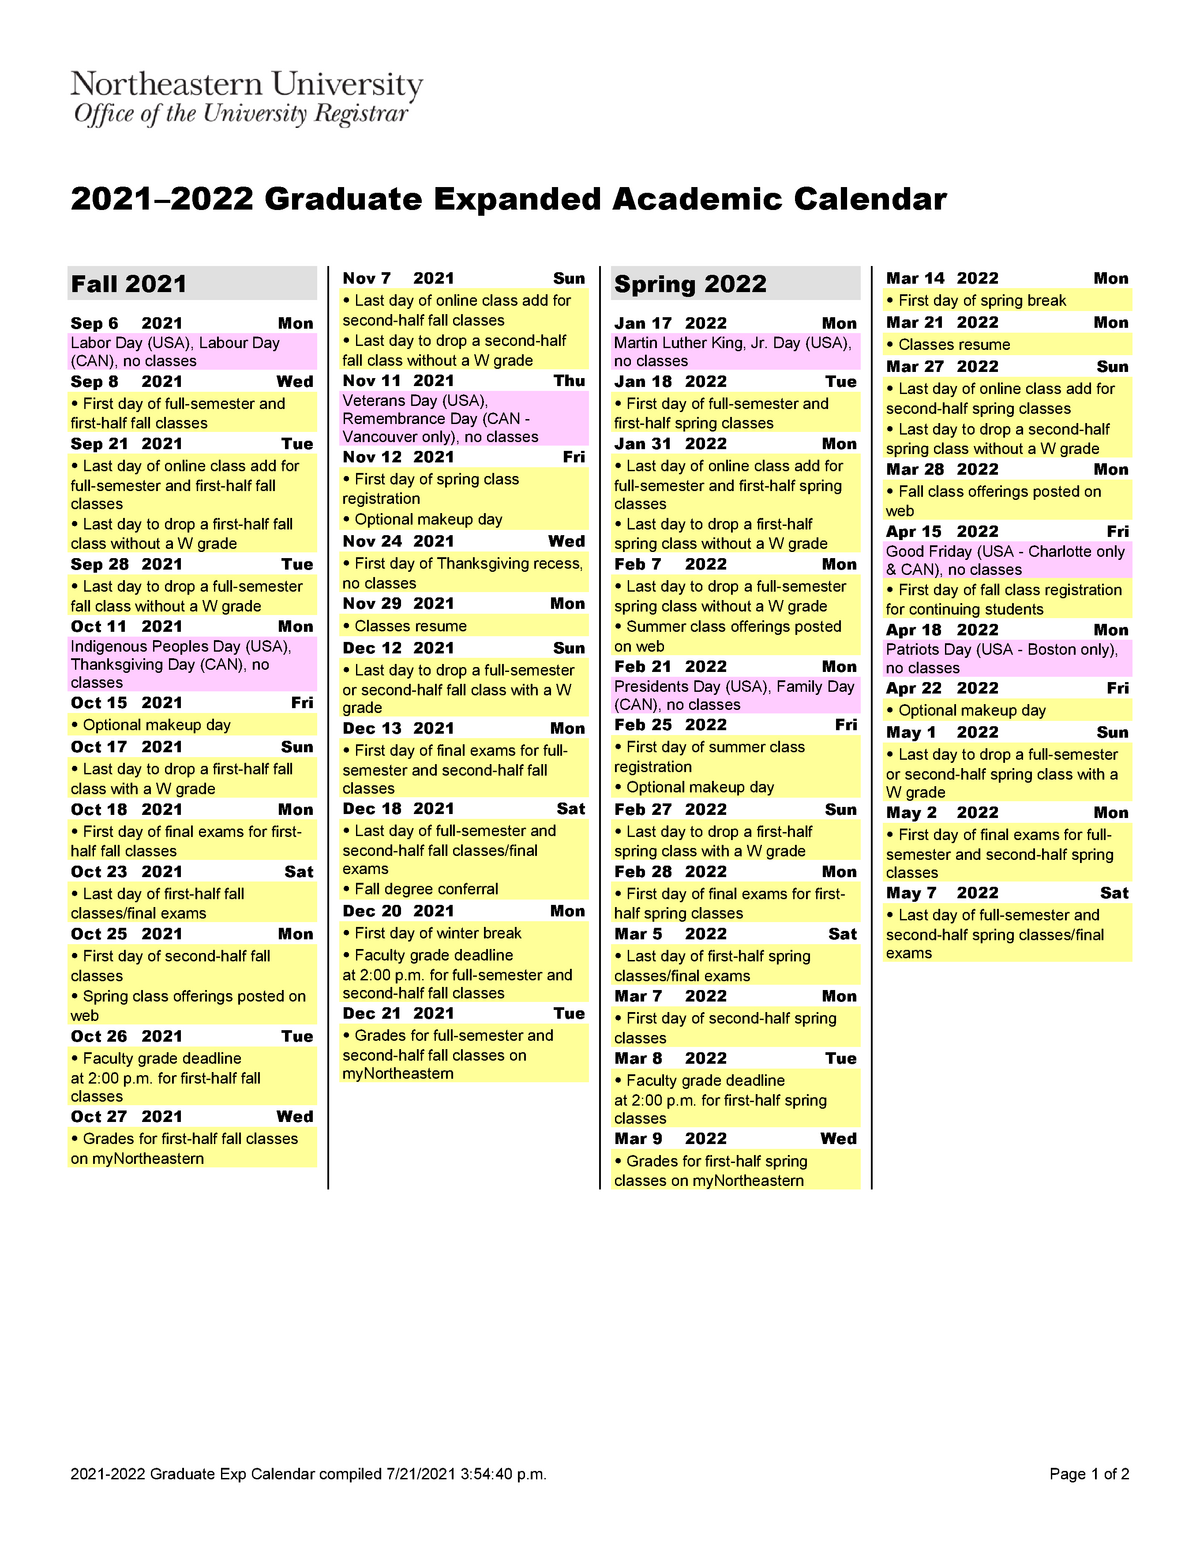 Emory Academic Calendar Fall 2022 2021 2022 Gr Expanded Calendar List 3 - Info 6215 - Business Analysis -  Studocu